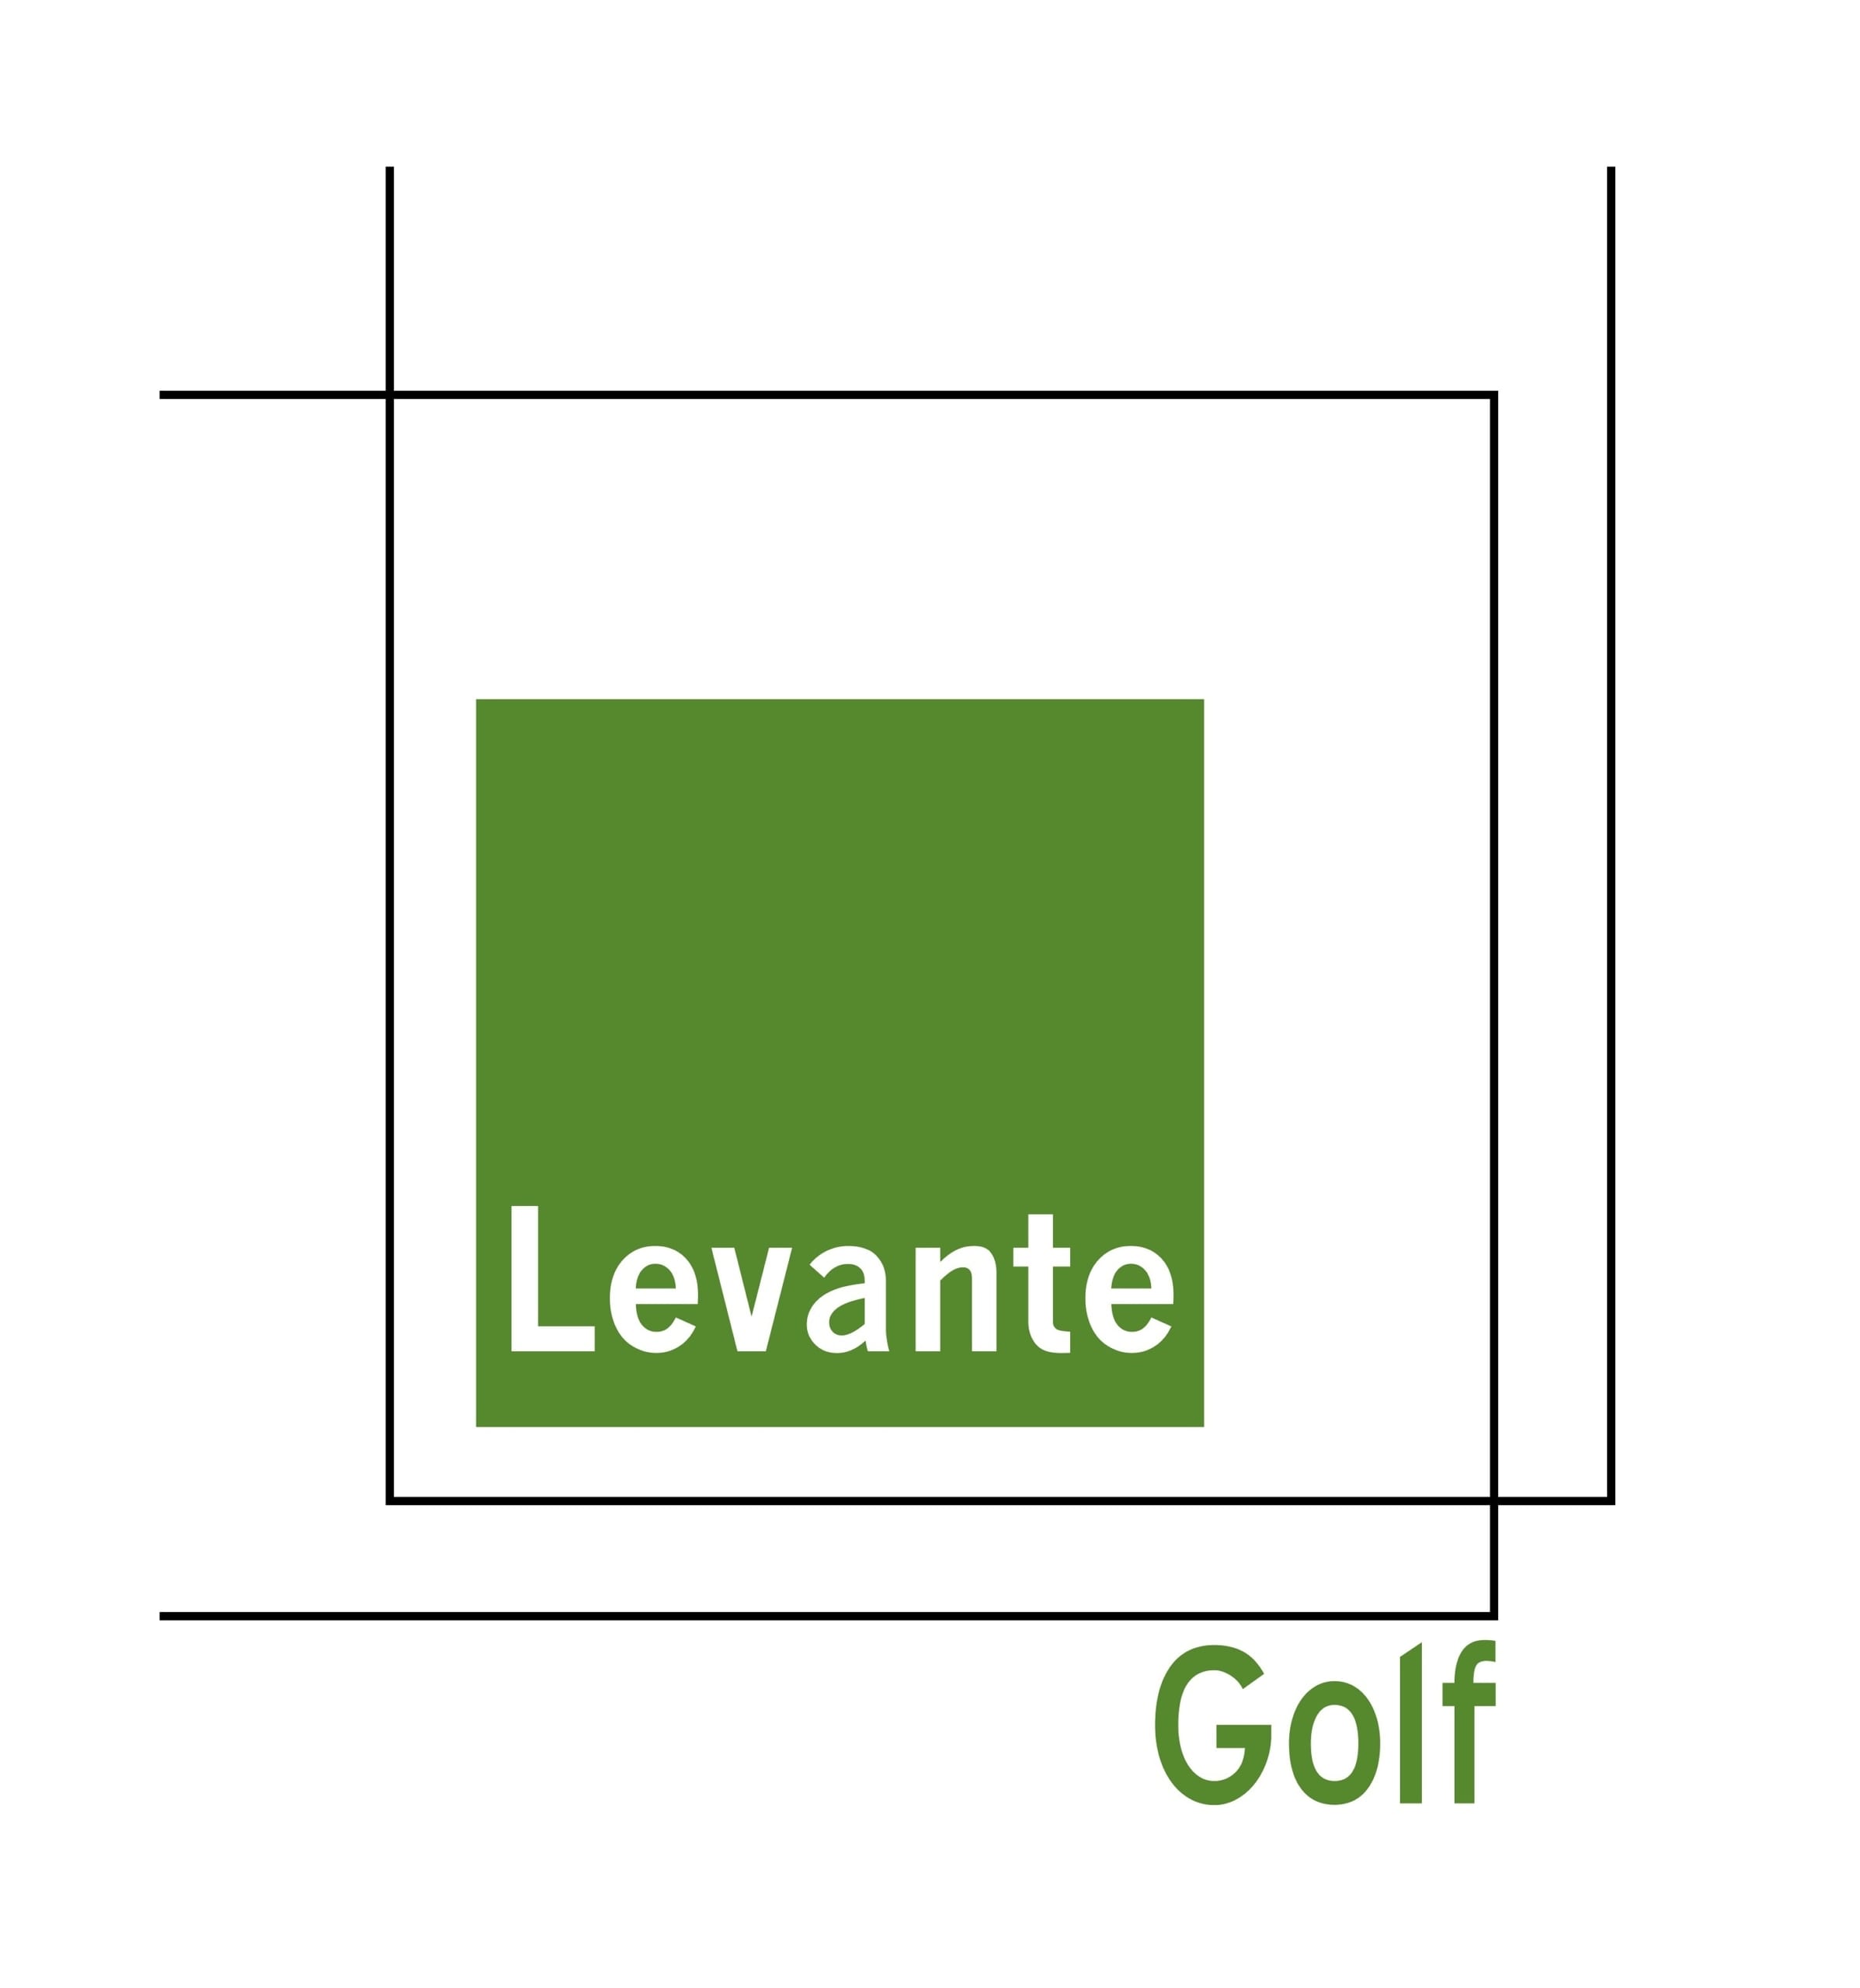 Levante Golf